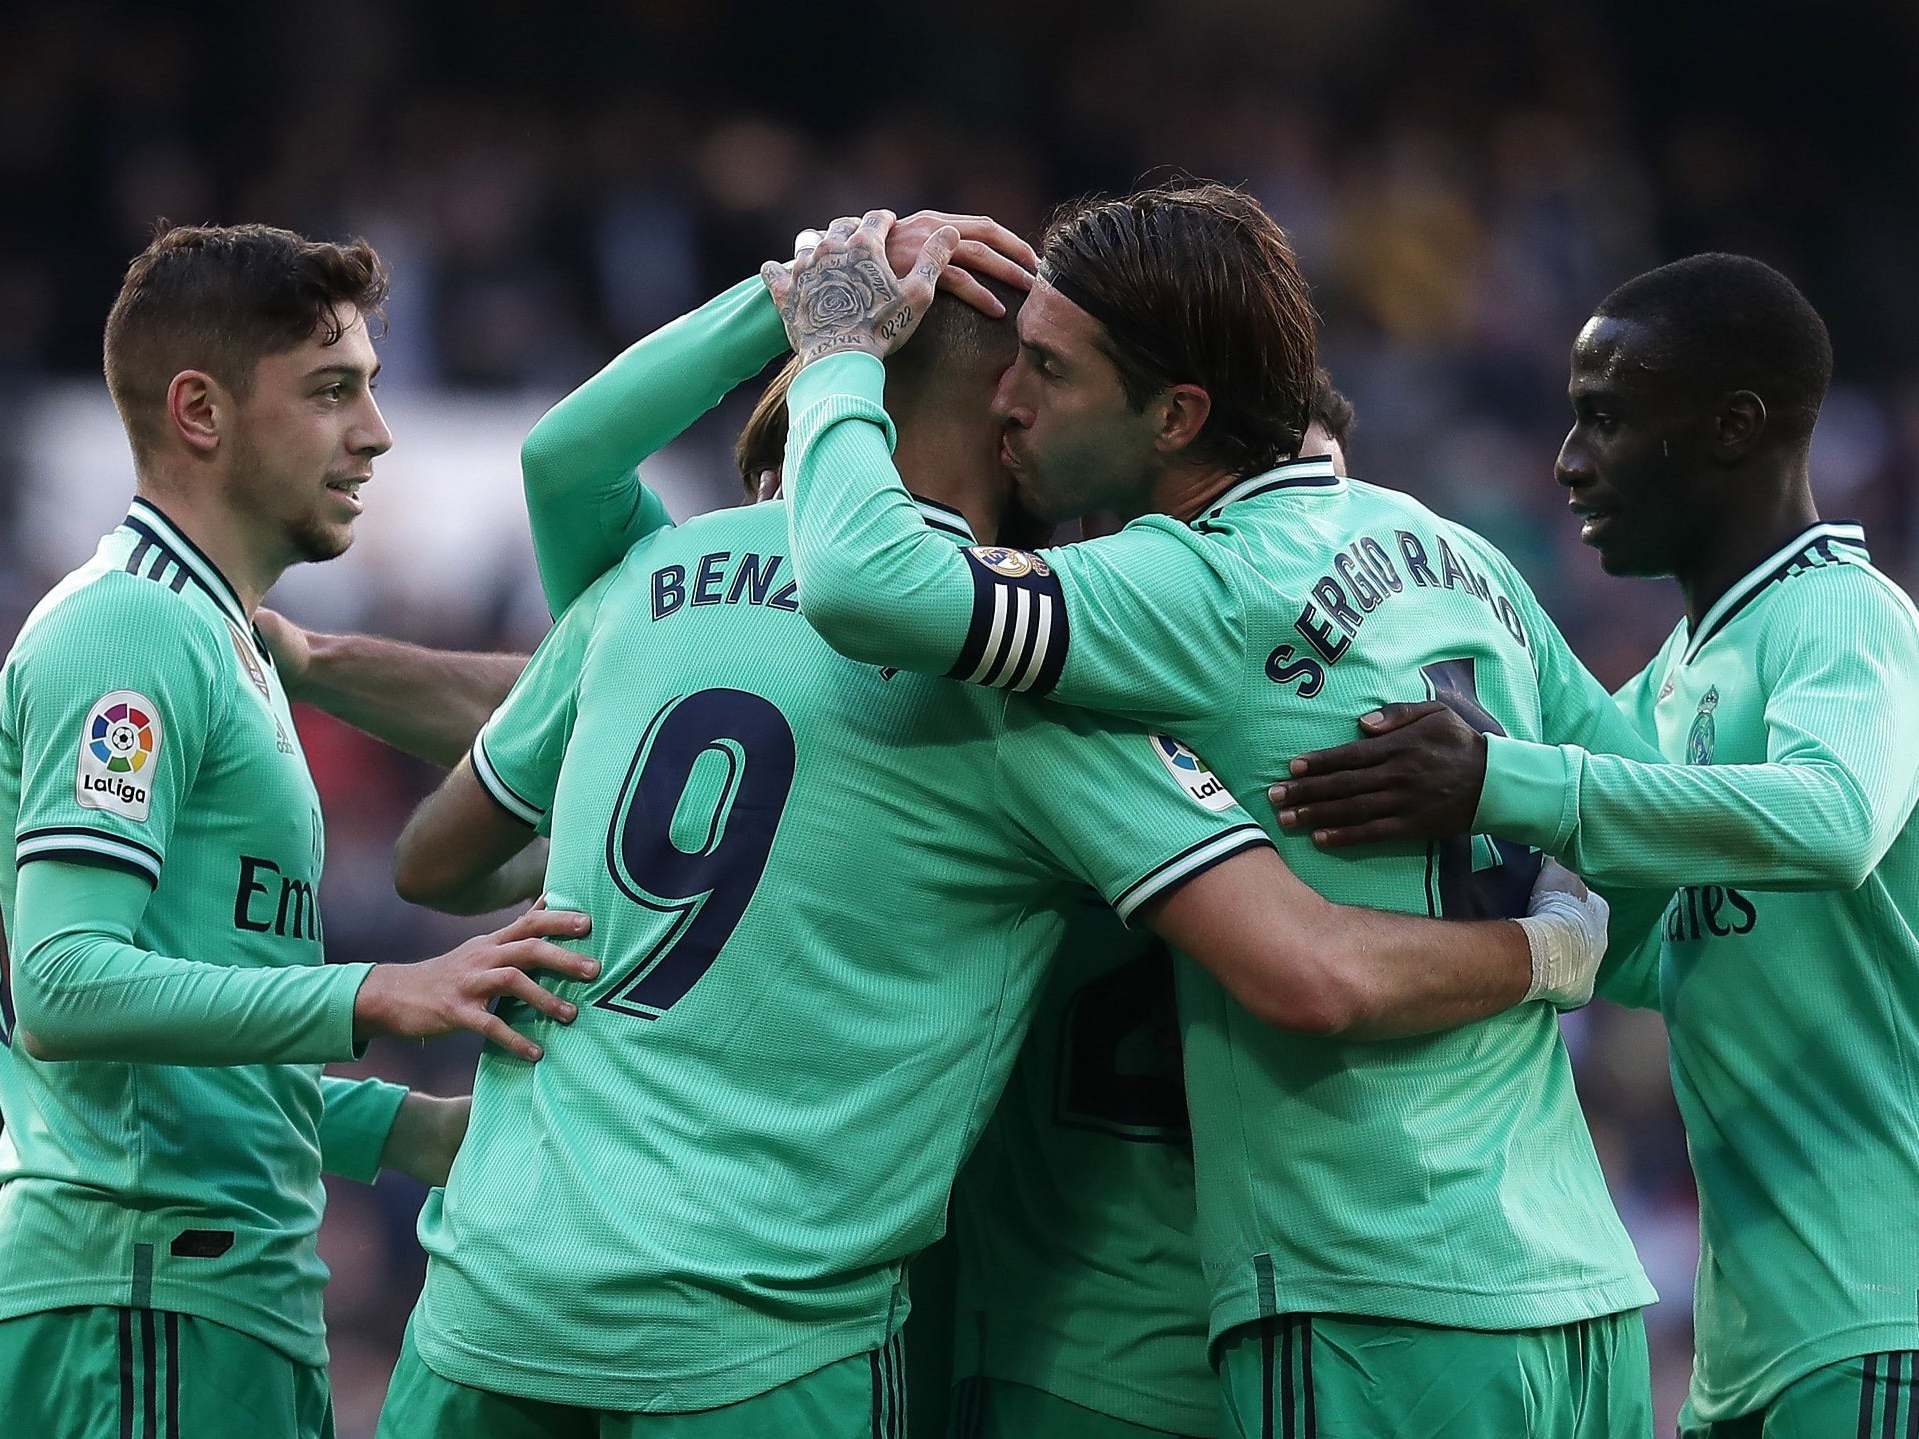 Real Madrid celebrate after scoring against Espanyol